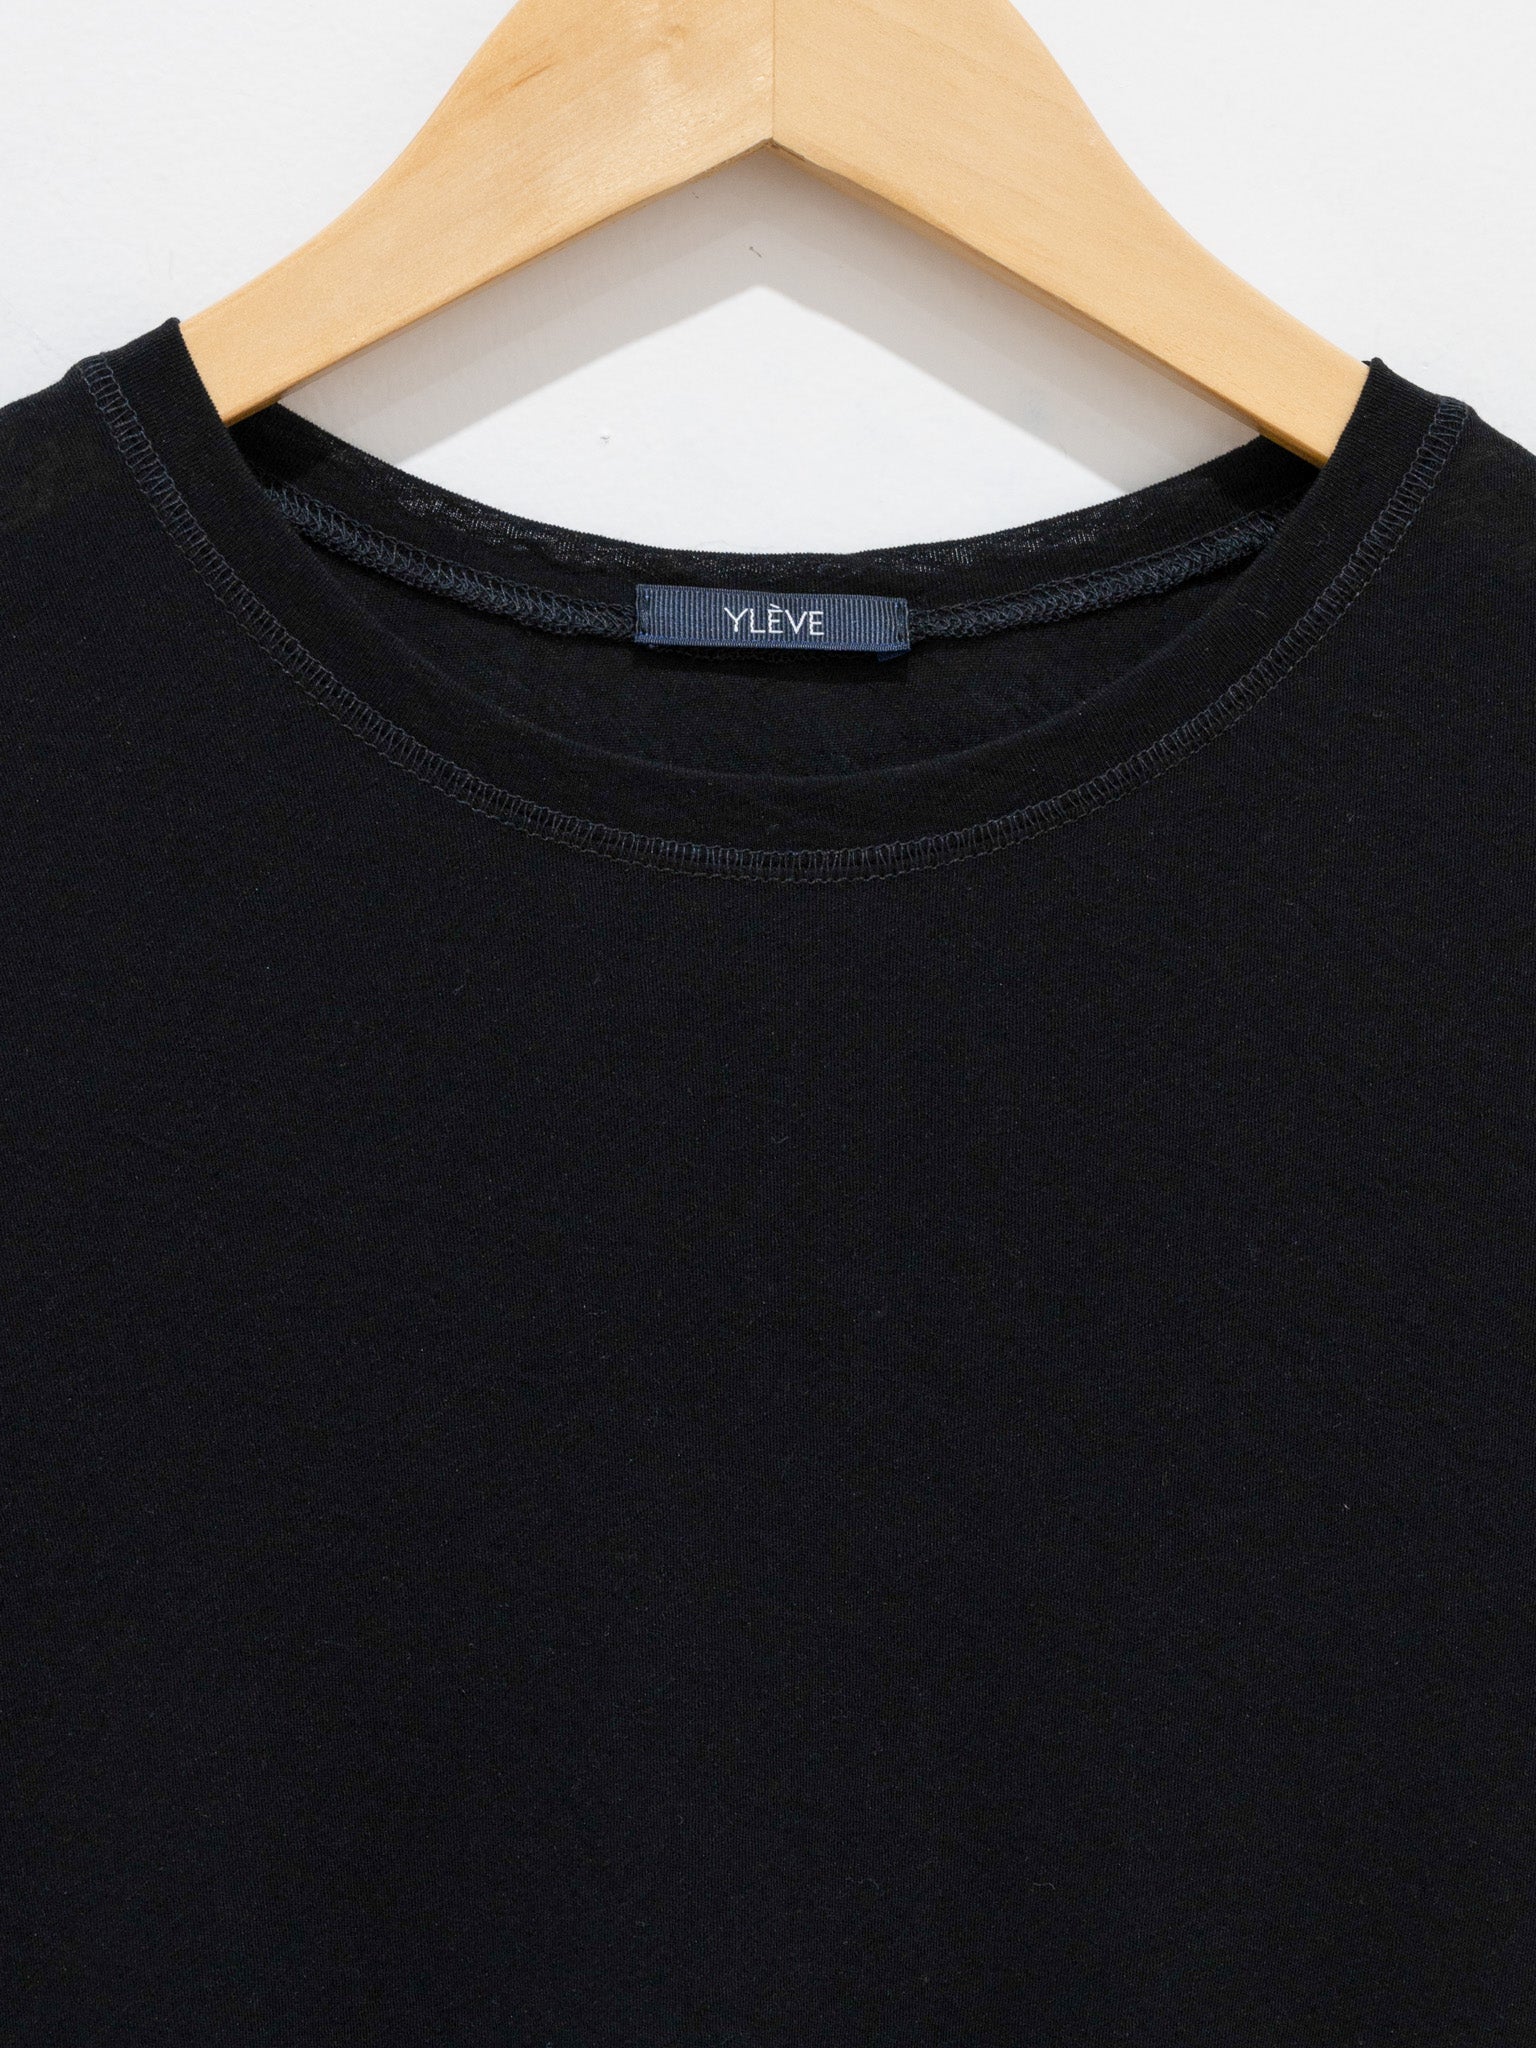 Namu Shop - Yleve Co/Li Sheer Jersey Short Sleeve Pullover - Black